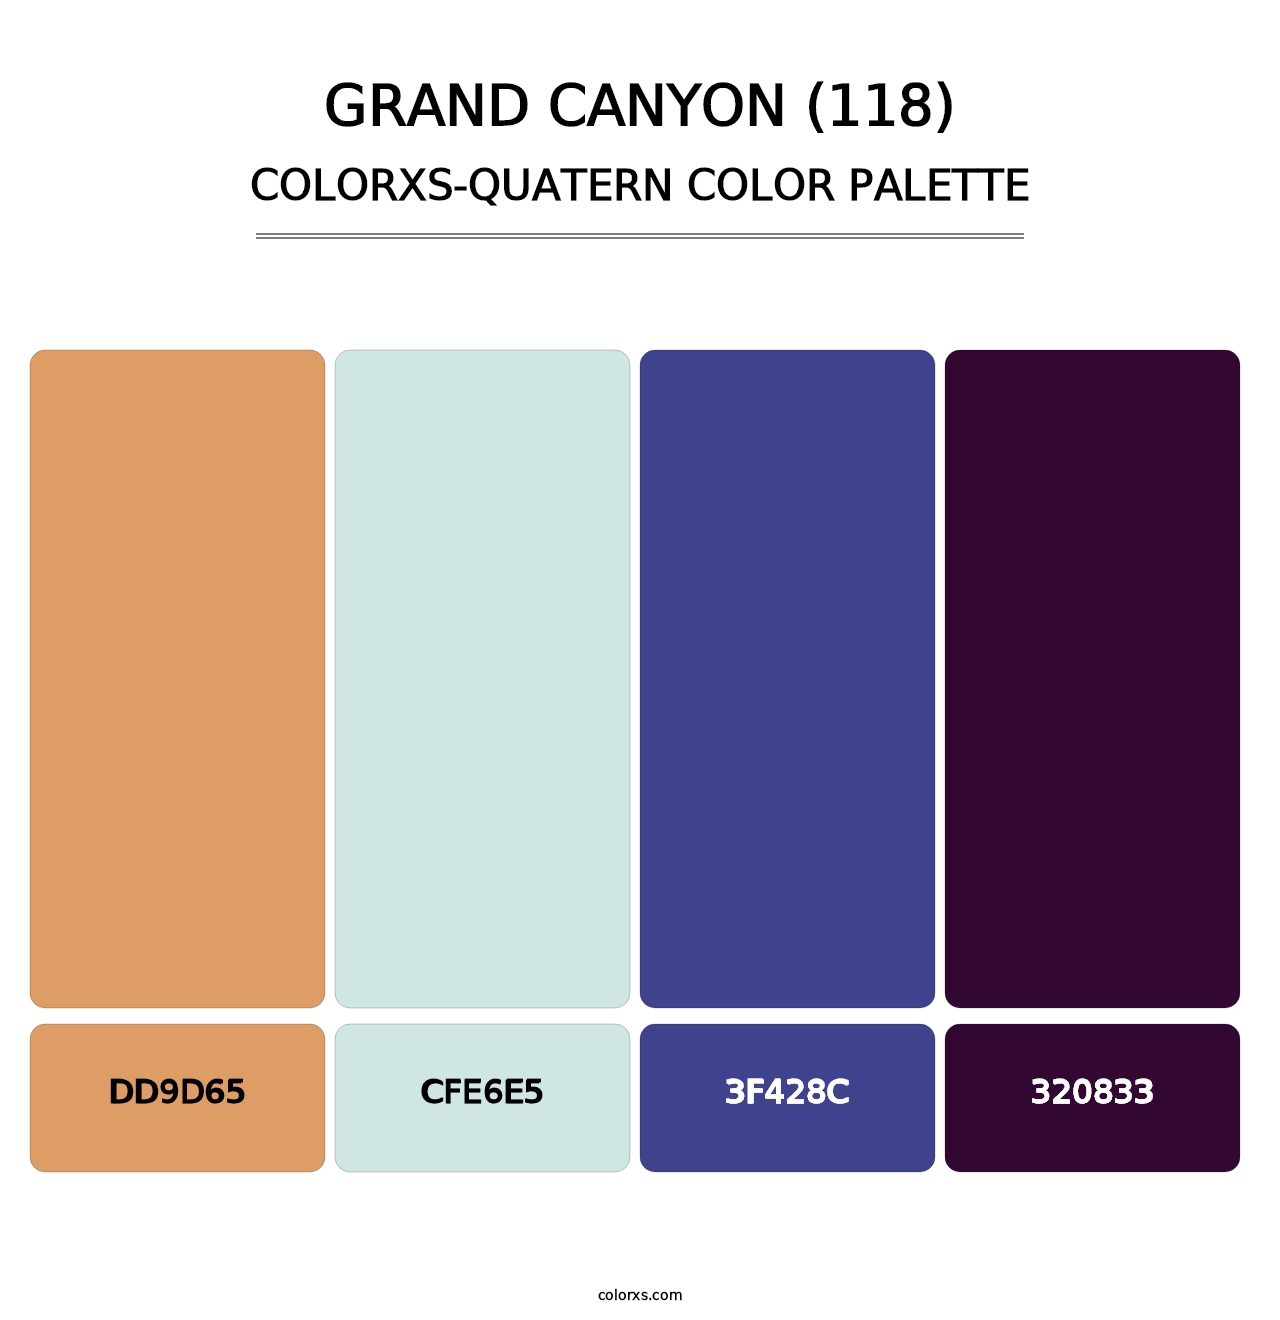 Grand Canyon (118) - Colorxs Quatern Palette